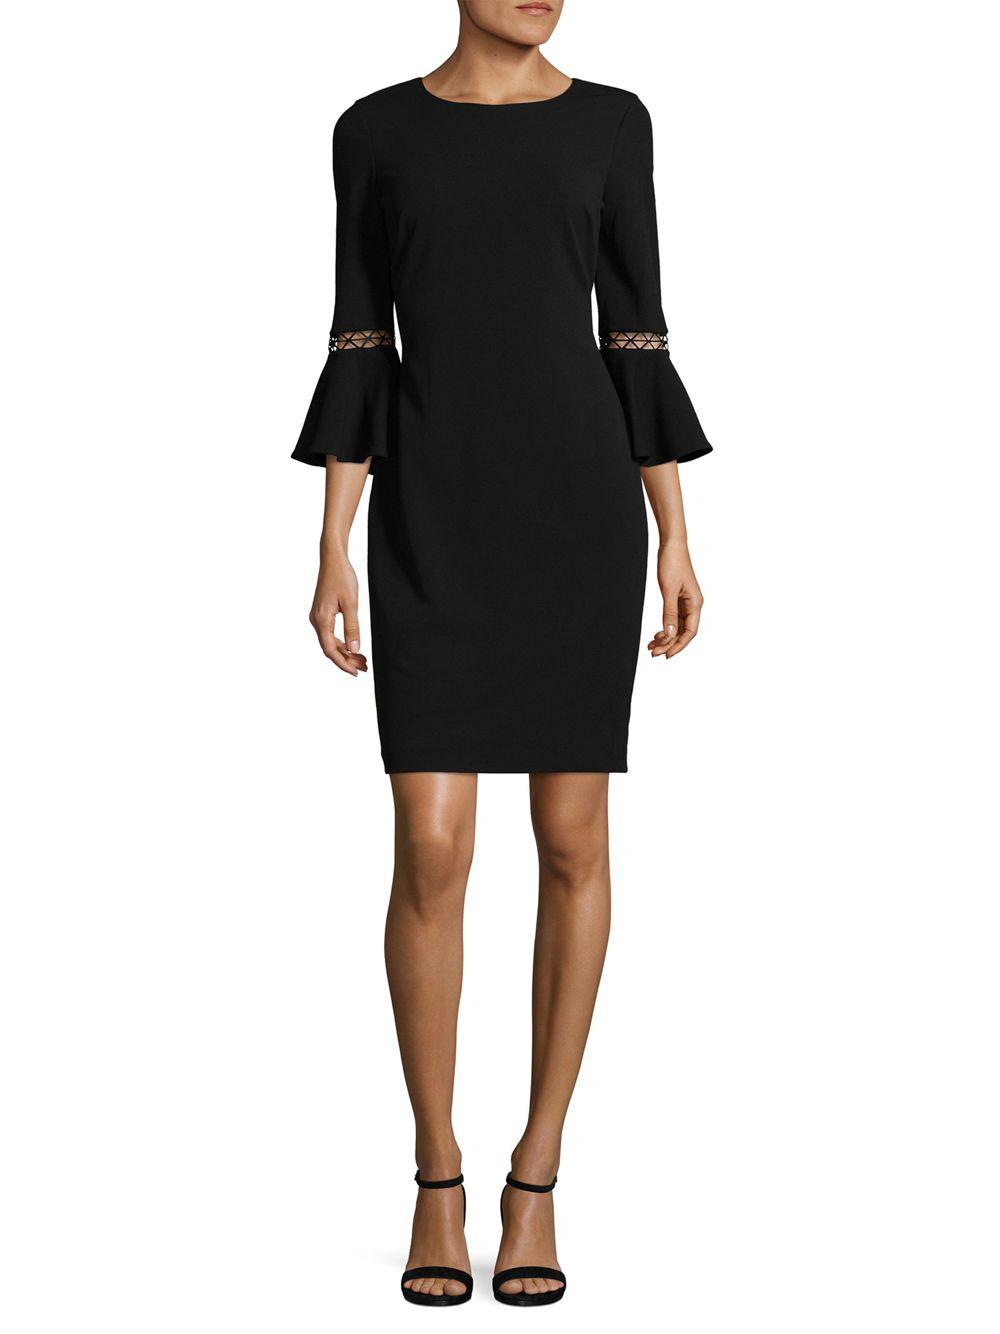 Calvin Klein Synthetic Bell-sleeve Sheath Dress in Black - Lyst